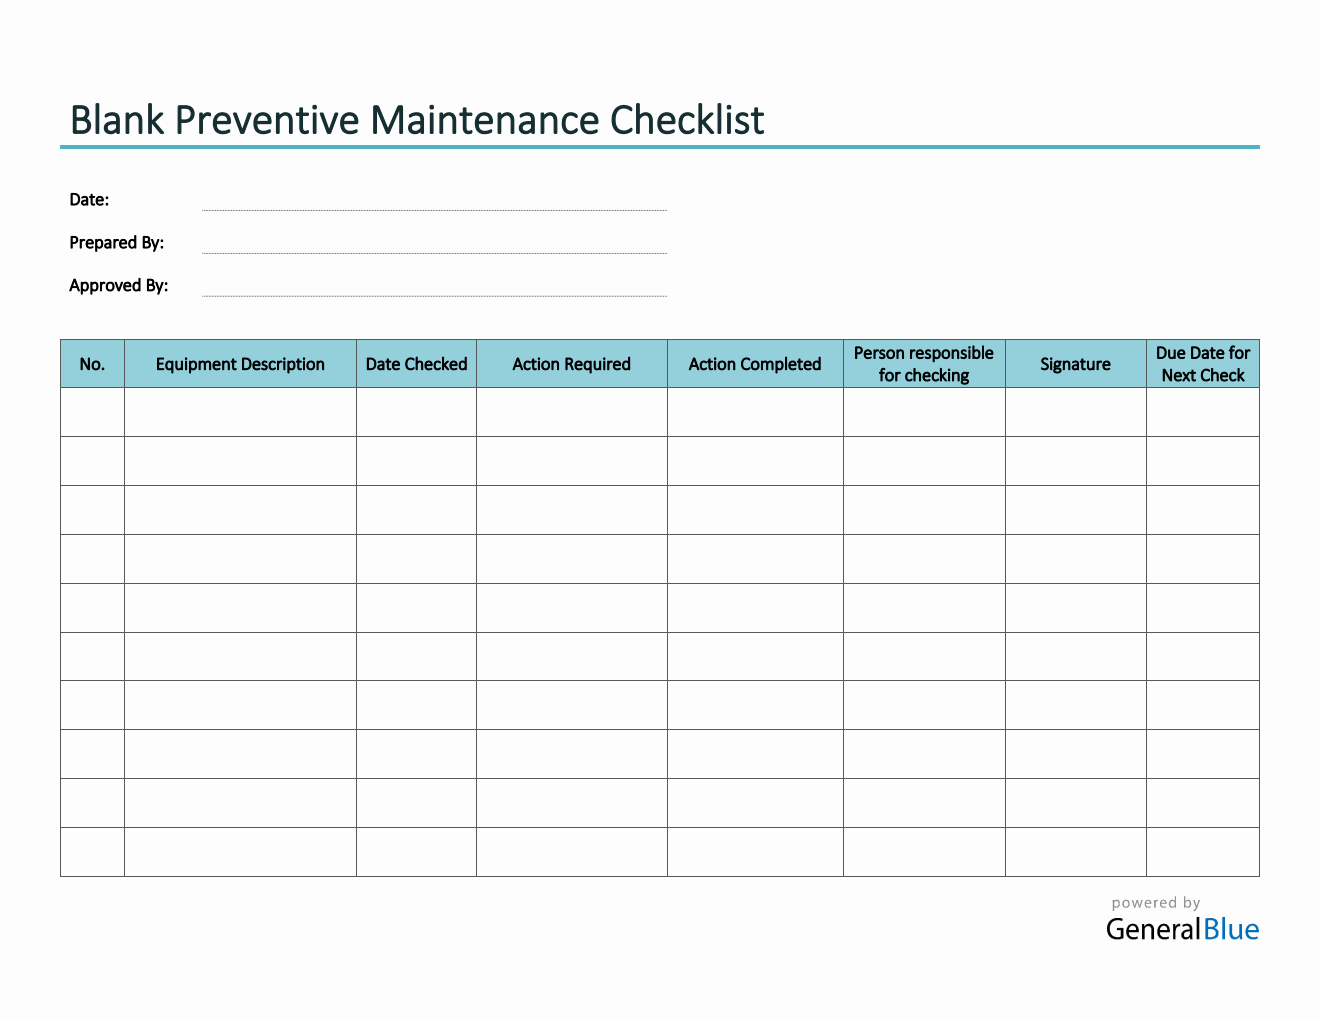 Blank Preventive Maintenance Checklist in PDF